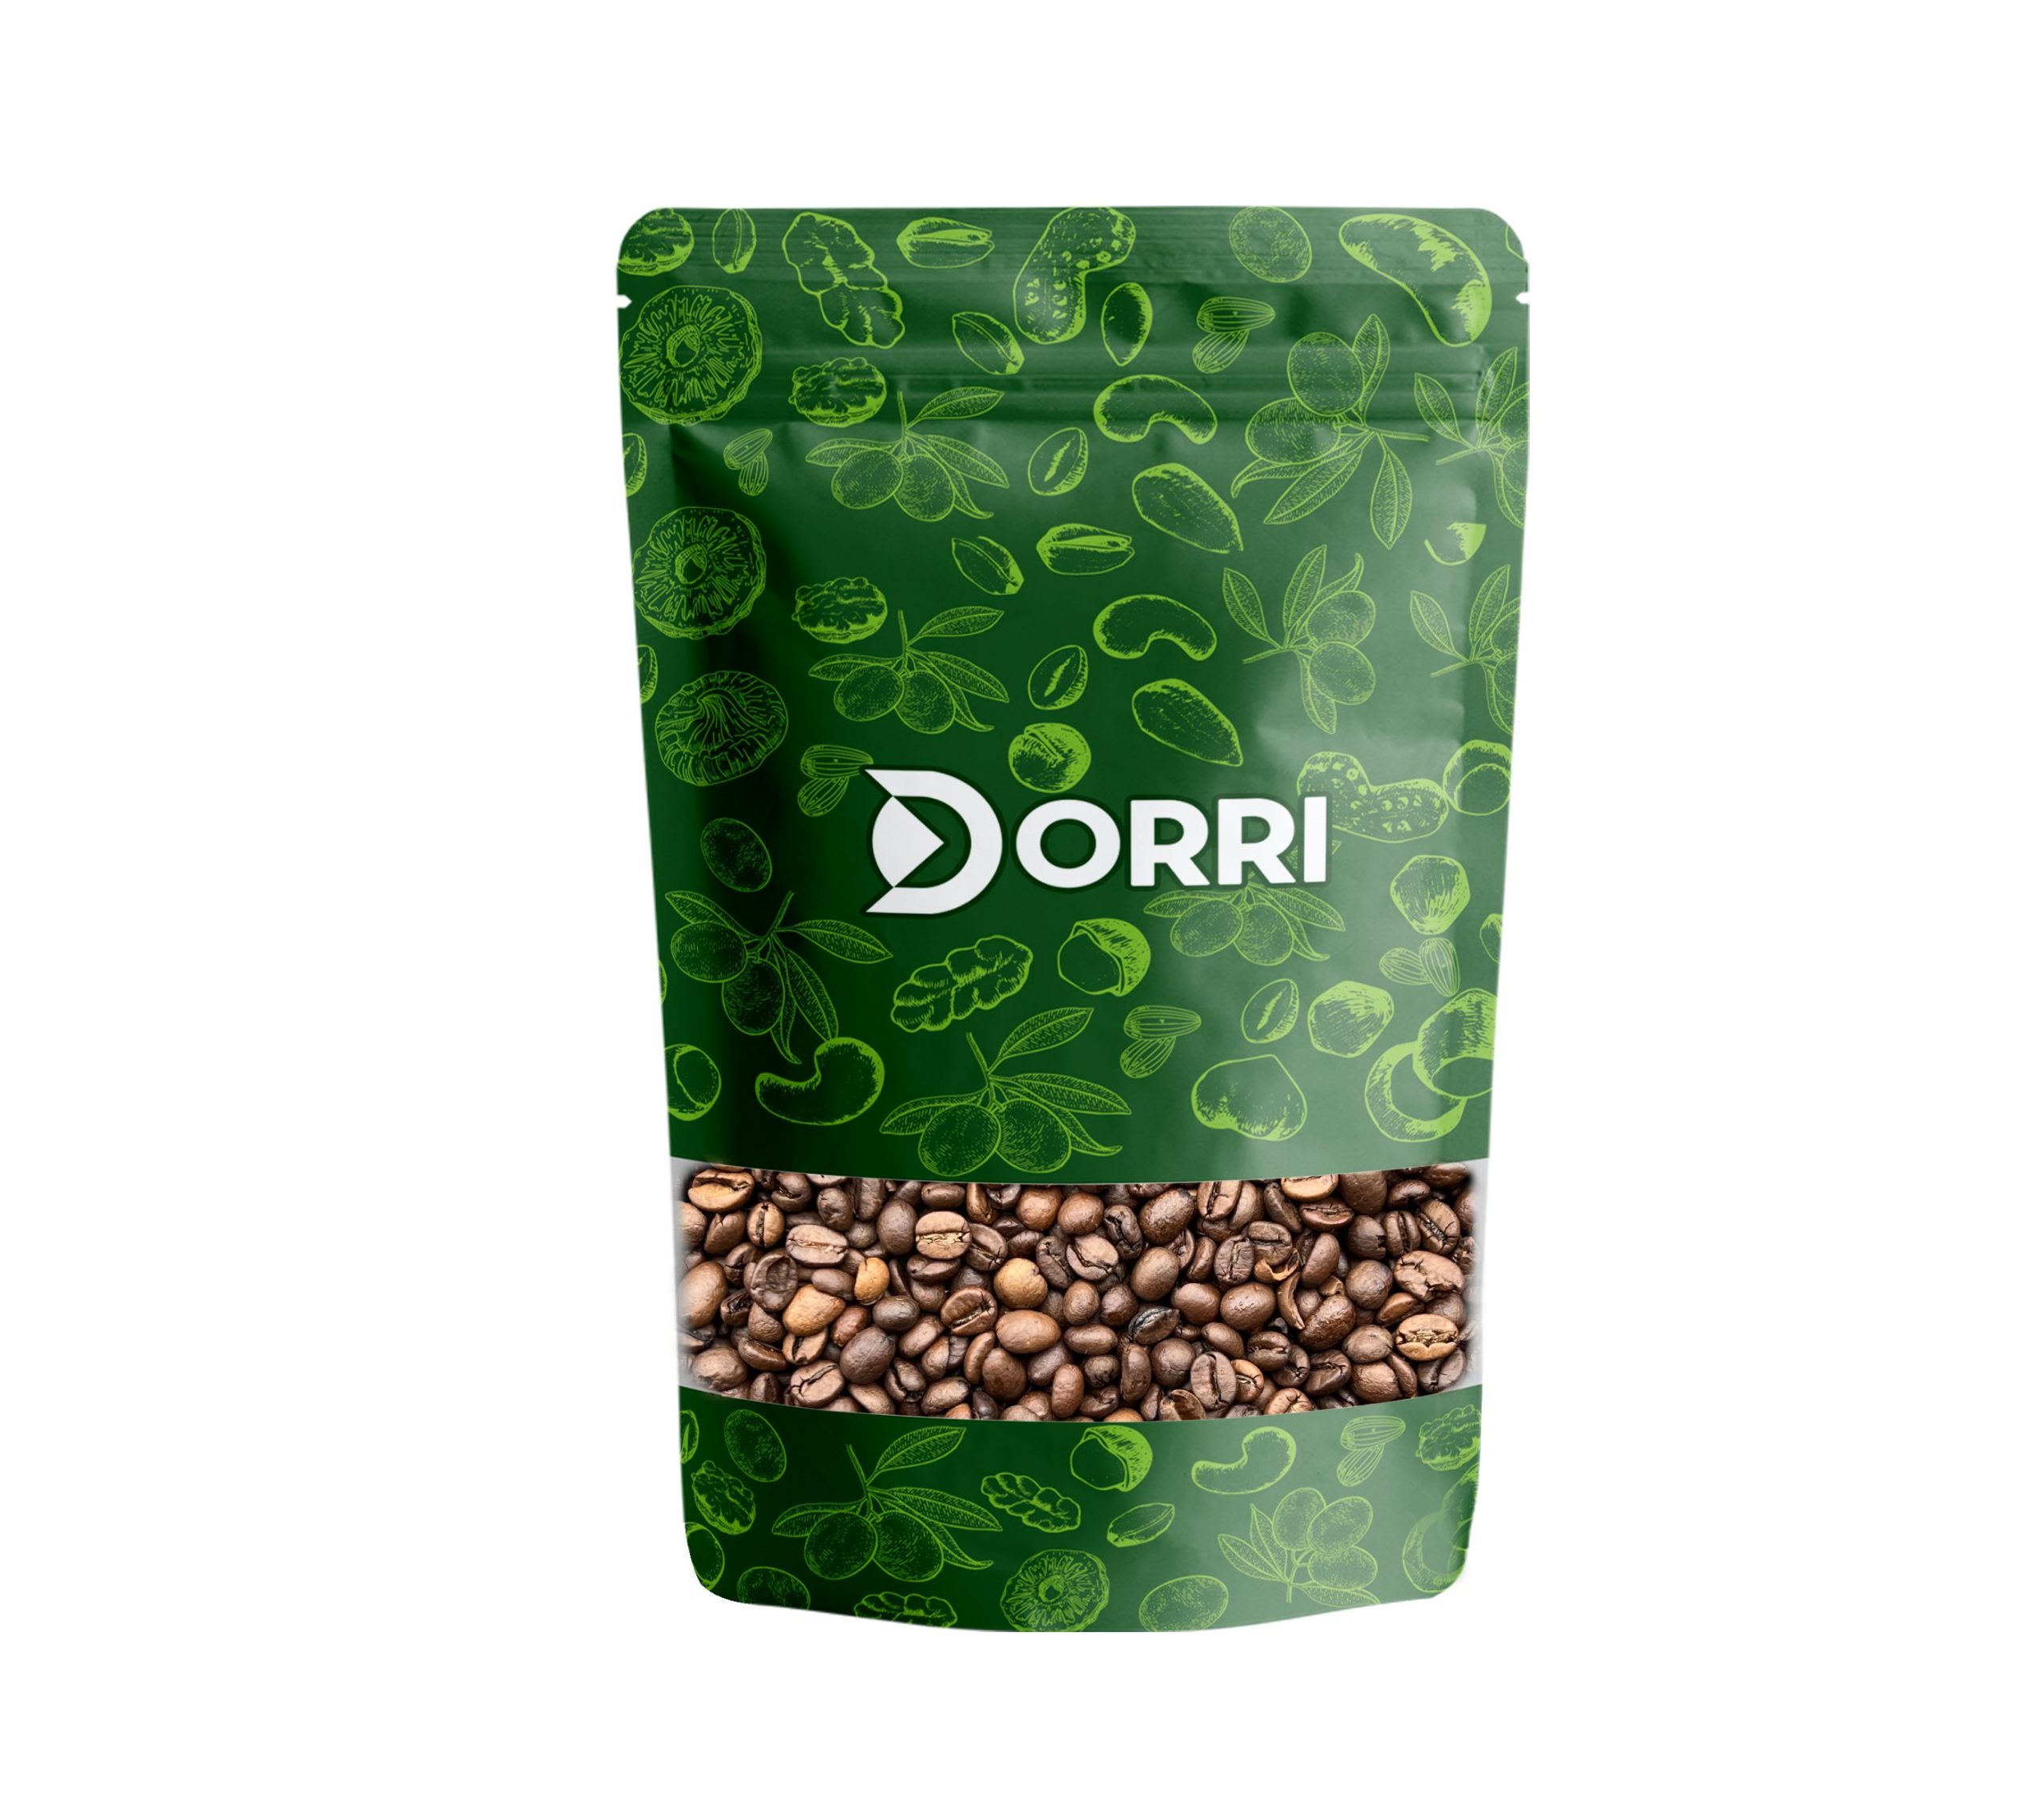 Dorri - Italian Roast Coffee